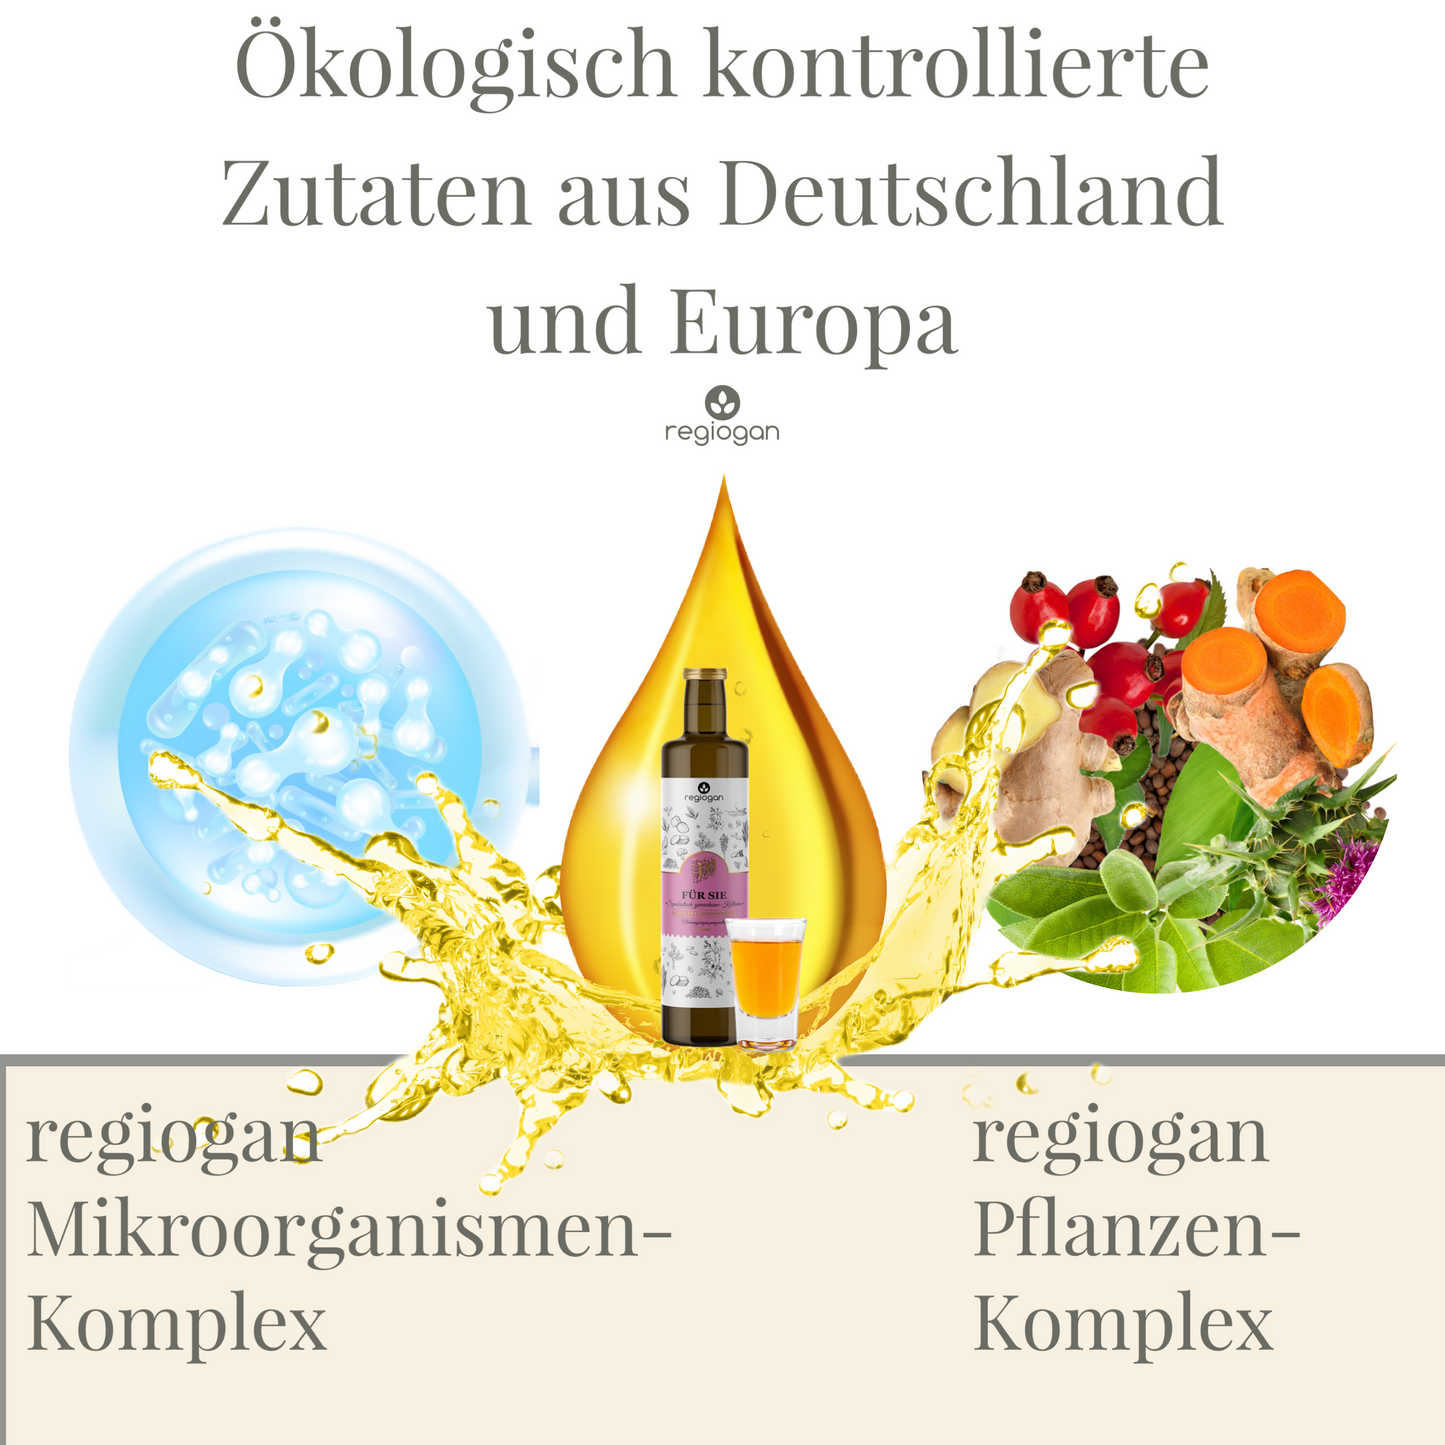 FÜR SIE | Raw organic plant ferment